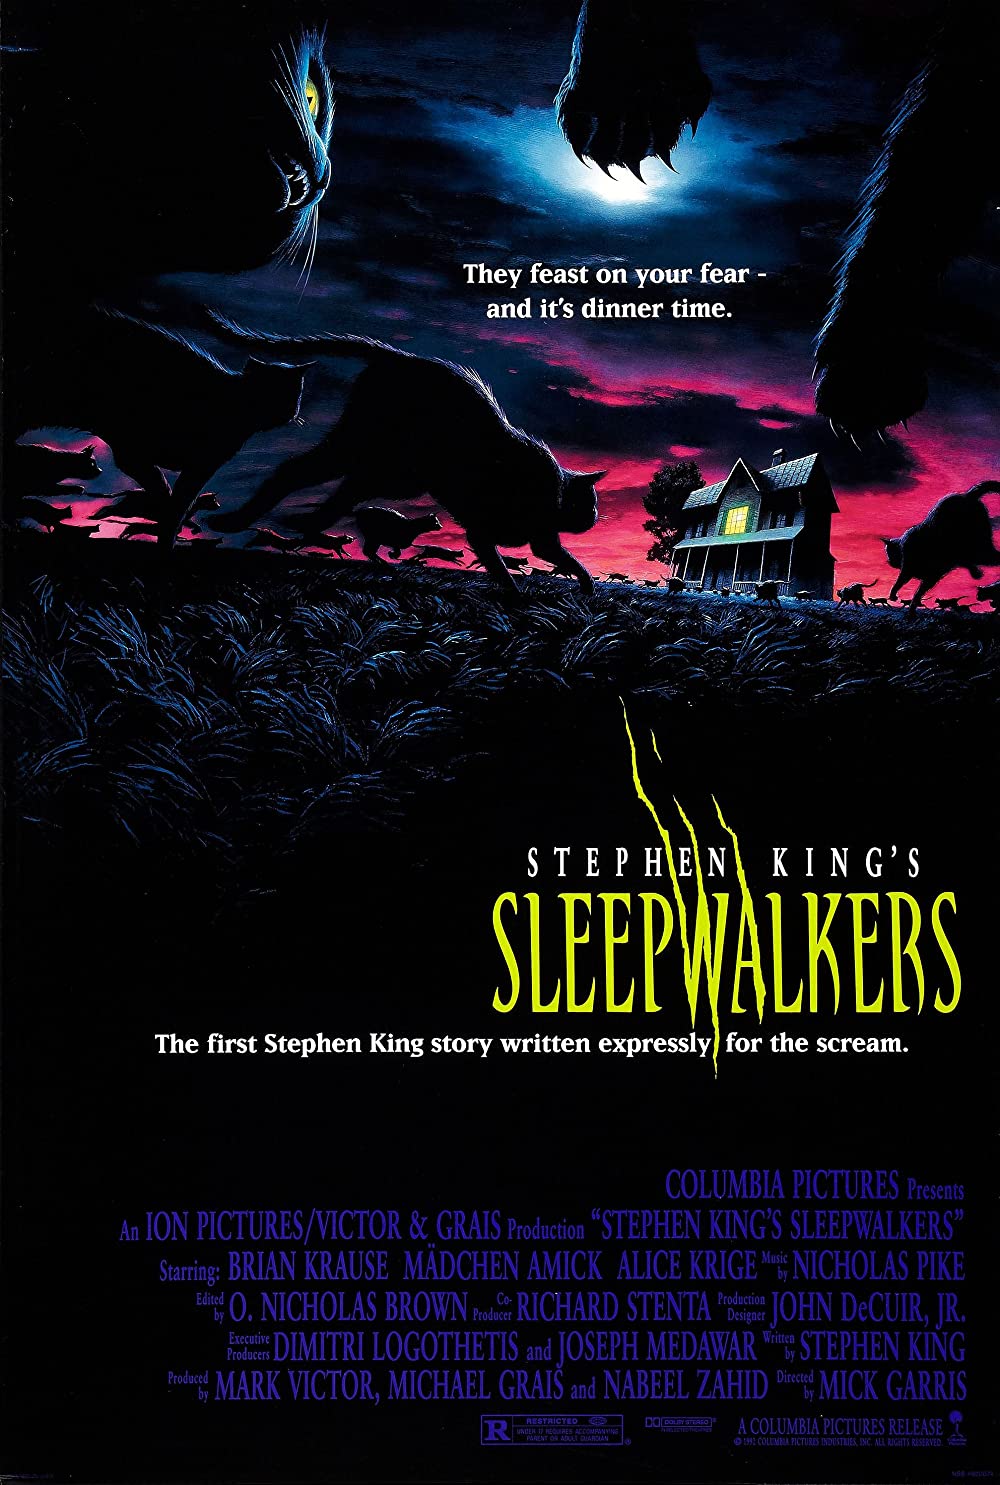 Filmbeschreibung zu Sleepwalkers